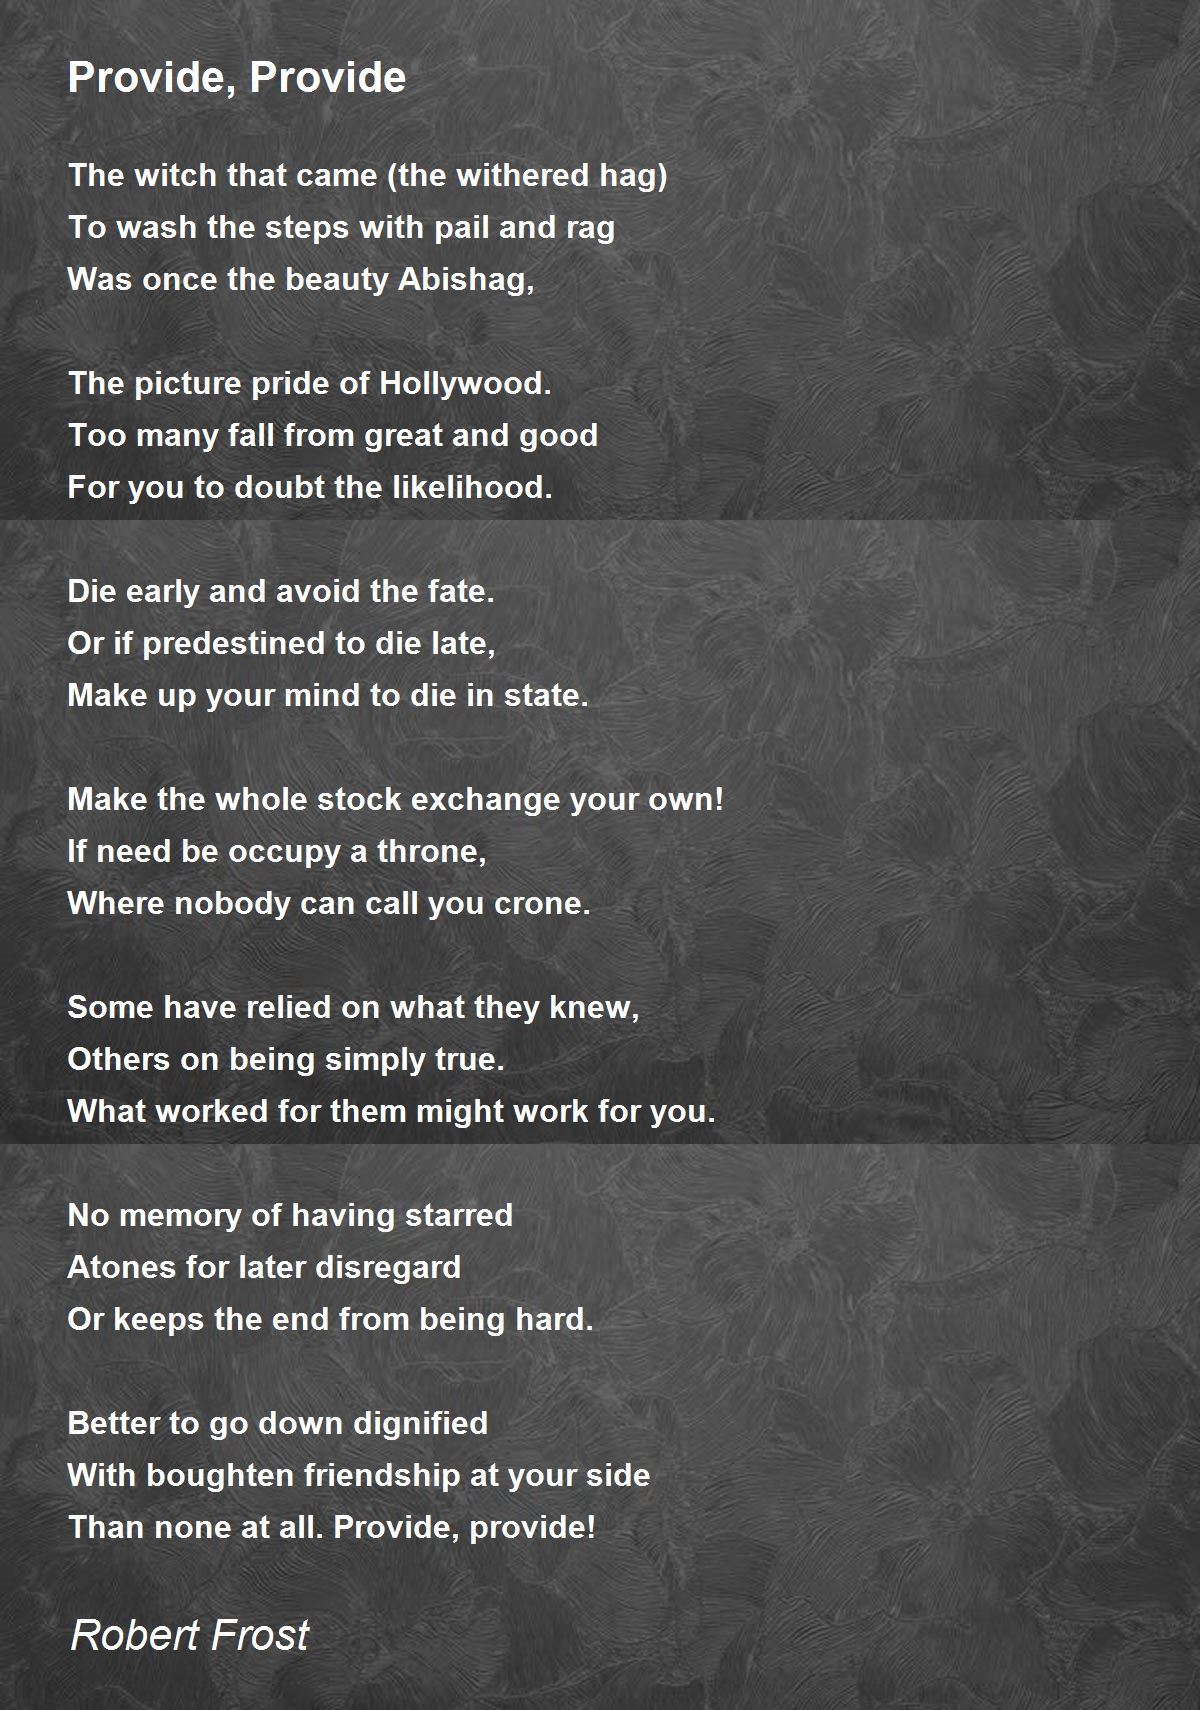 Provide, Provide Poem by Robert Frost - Poem Hunter